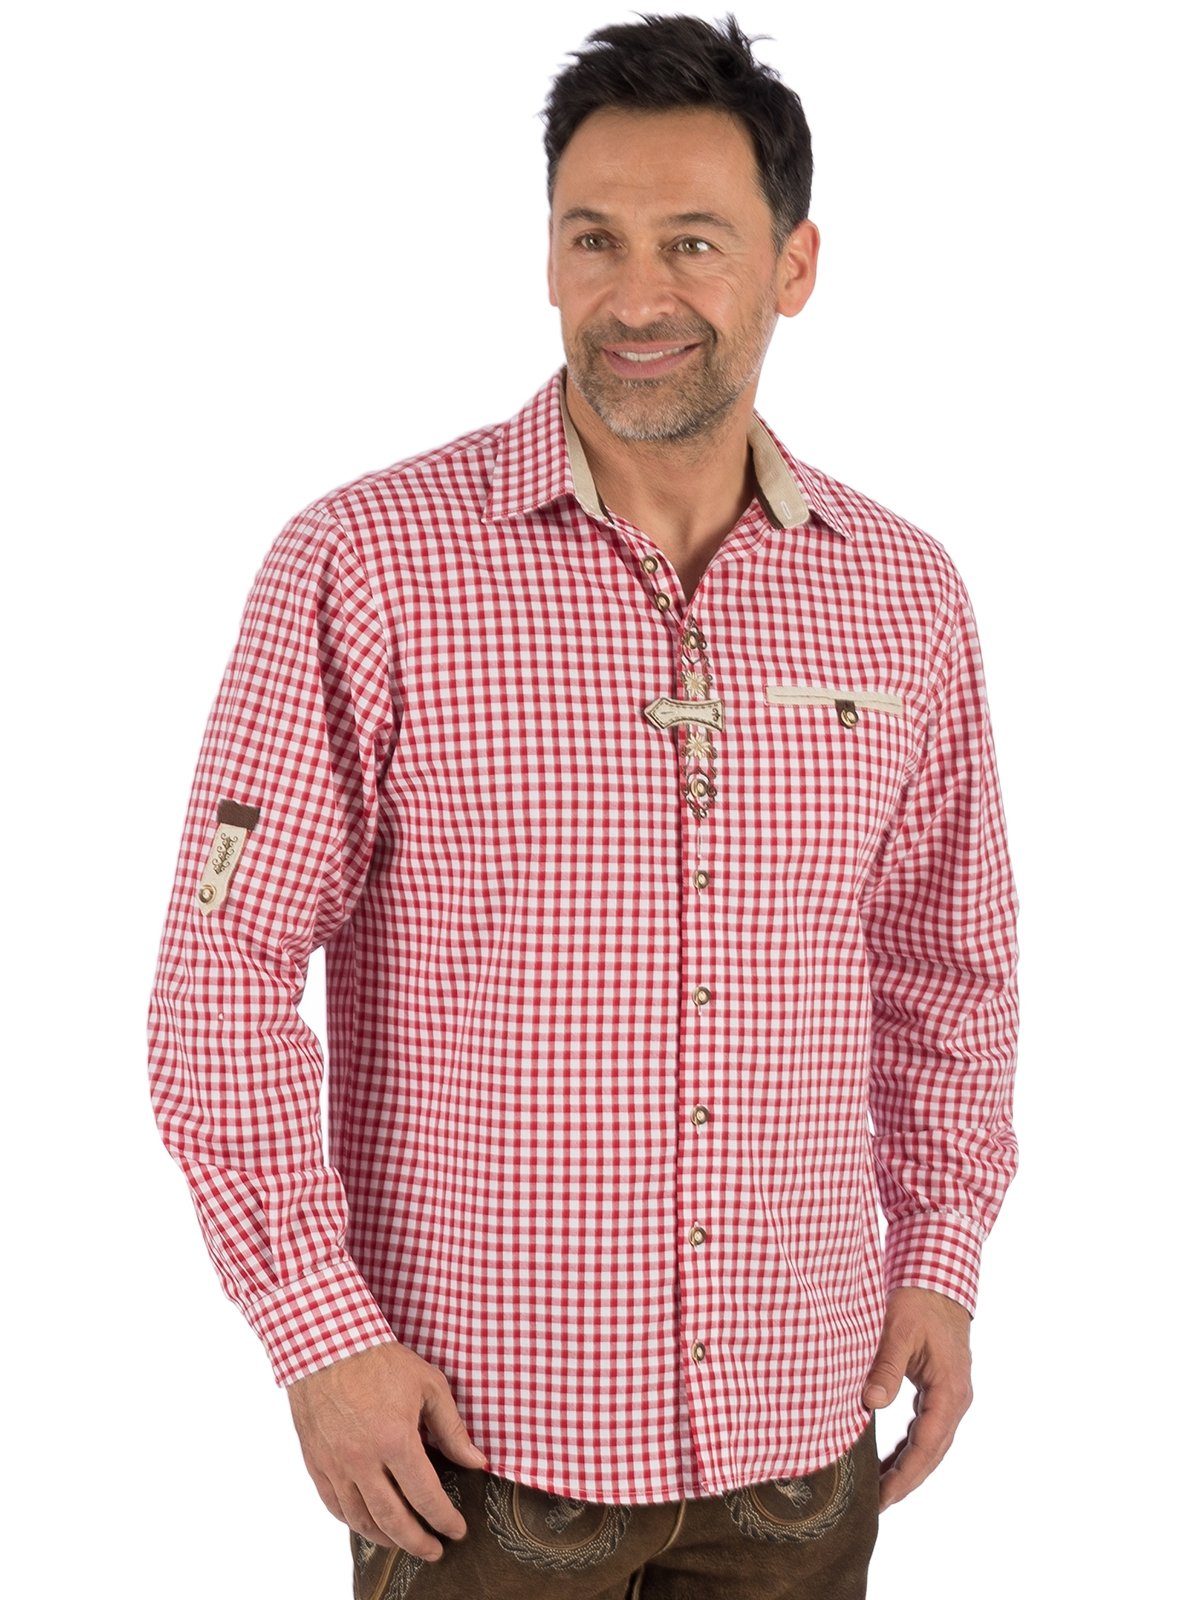 OS-Trachten Trachtenhemd karo rot (Regular Fit) DACHSTEIN Trachtenhemd